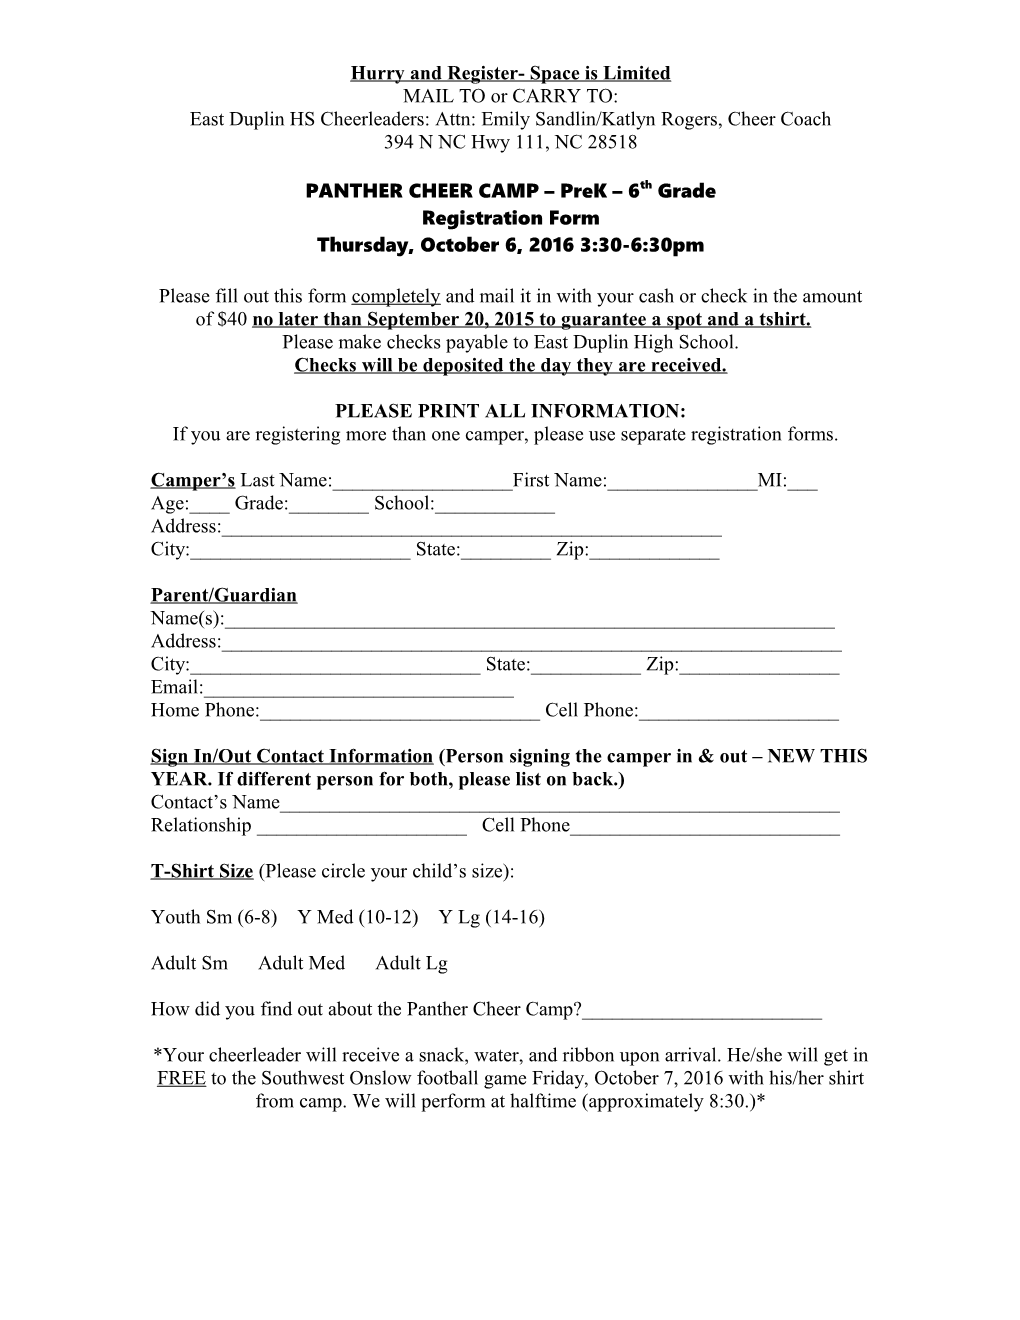 WILDCAT MINI CHEER CAMP Registration Form